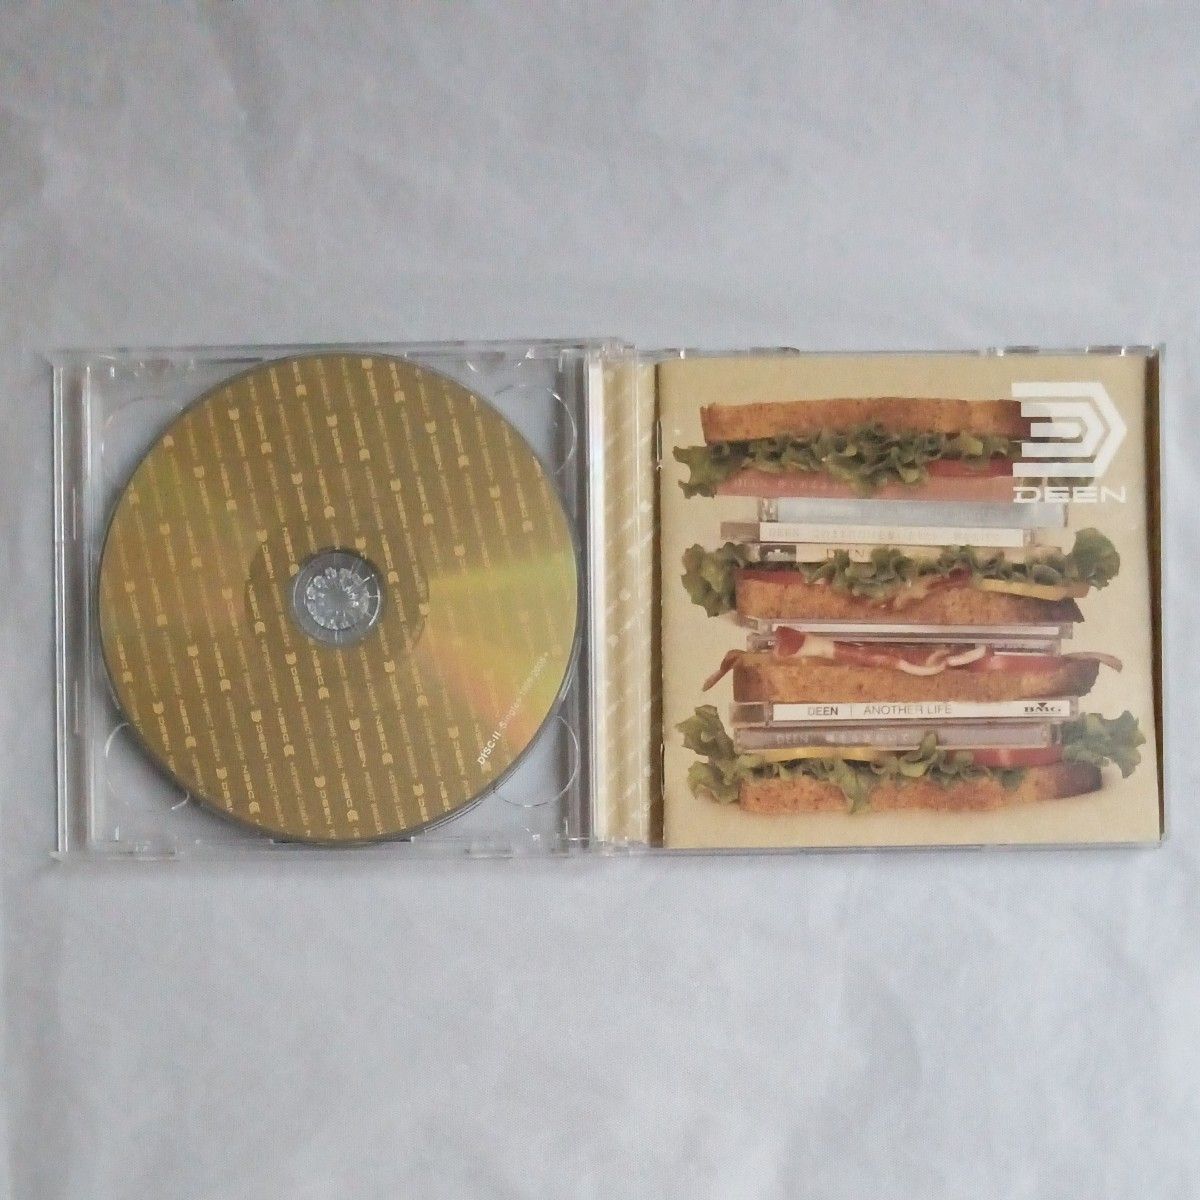 DEEN deen ディーン PERFECT SINGLES+ CD 2枚組 音楽 邦楽 ポップス ベストアルバム 